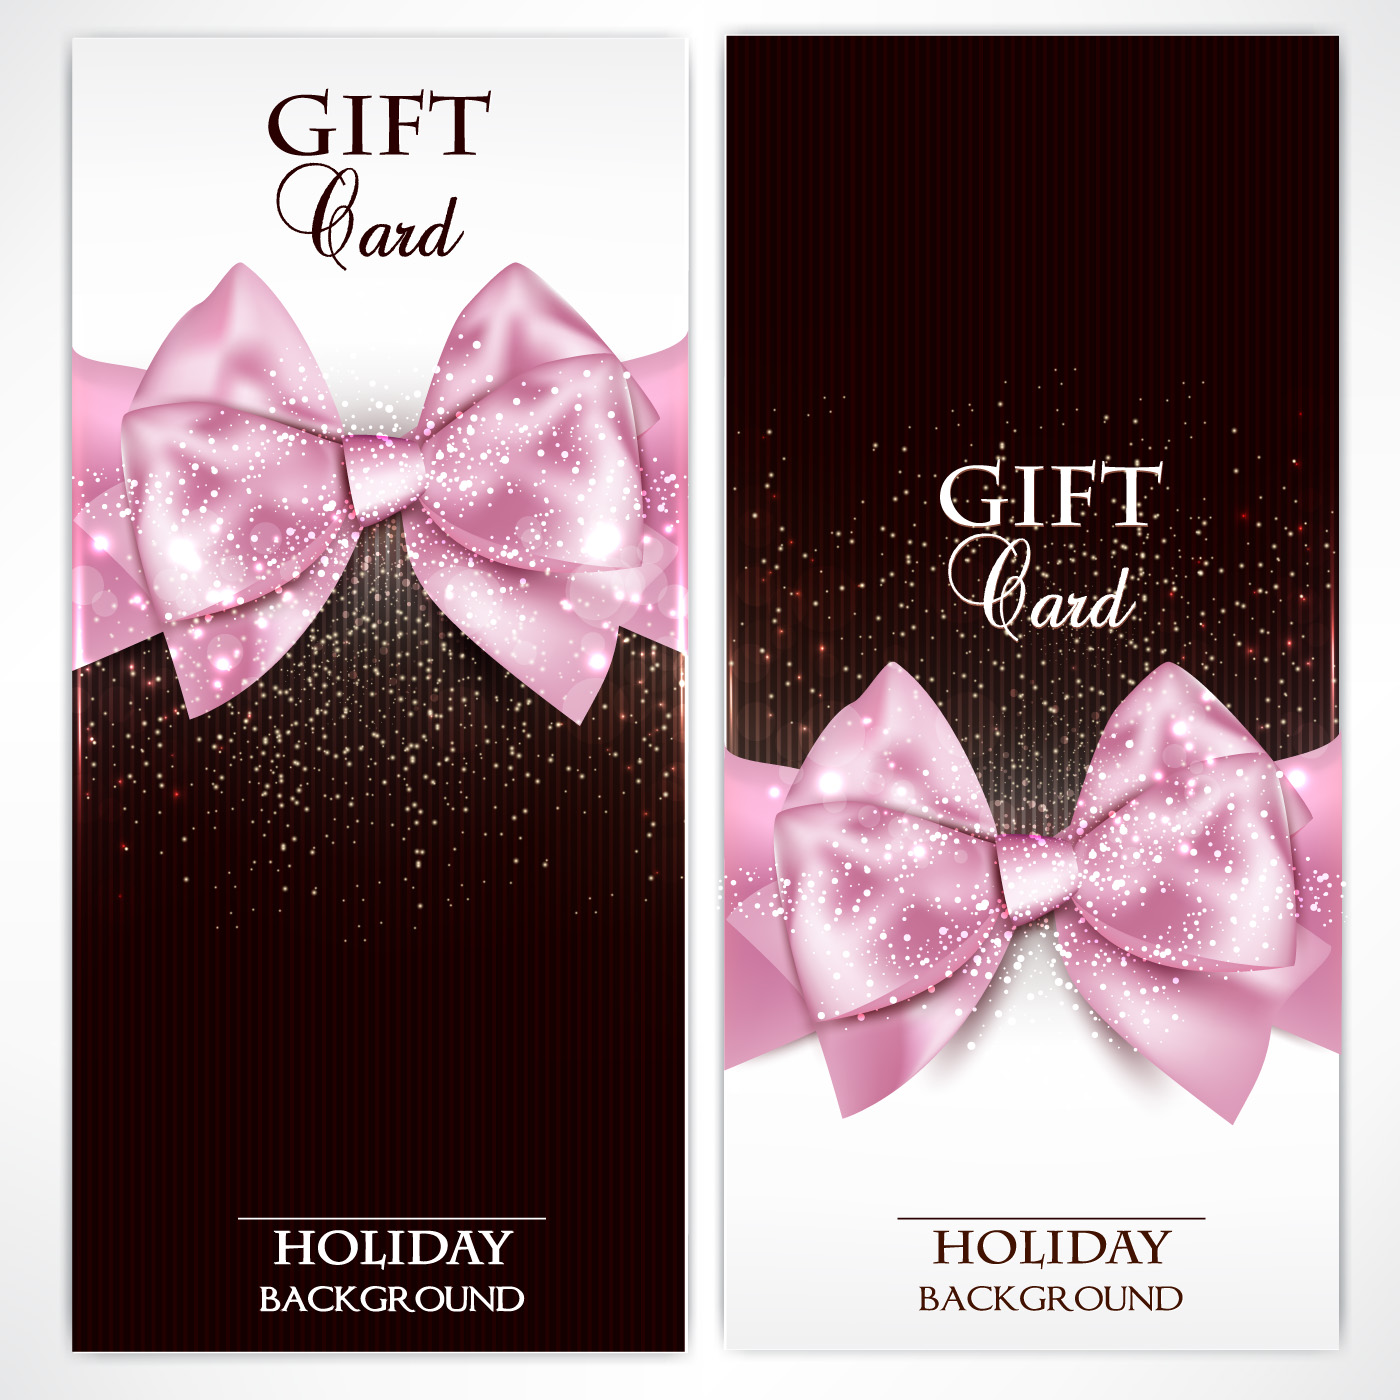 Shiny Holiday Gift Cards vector 01  